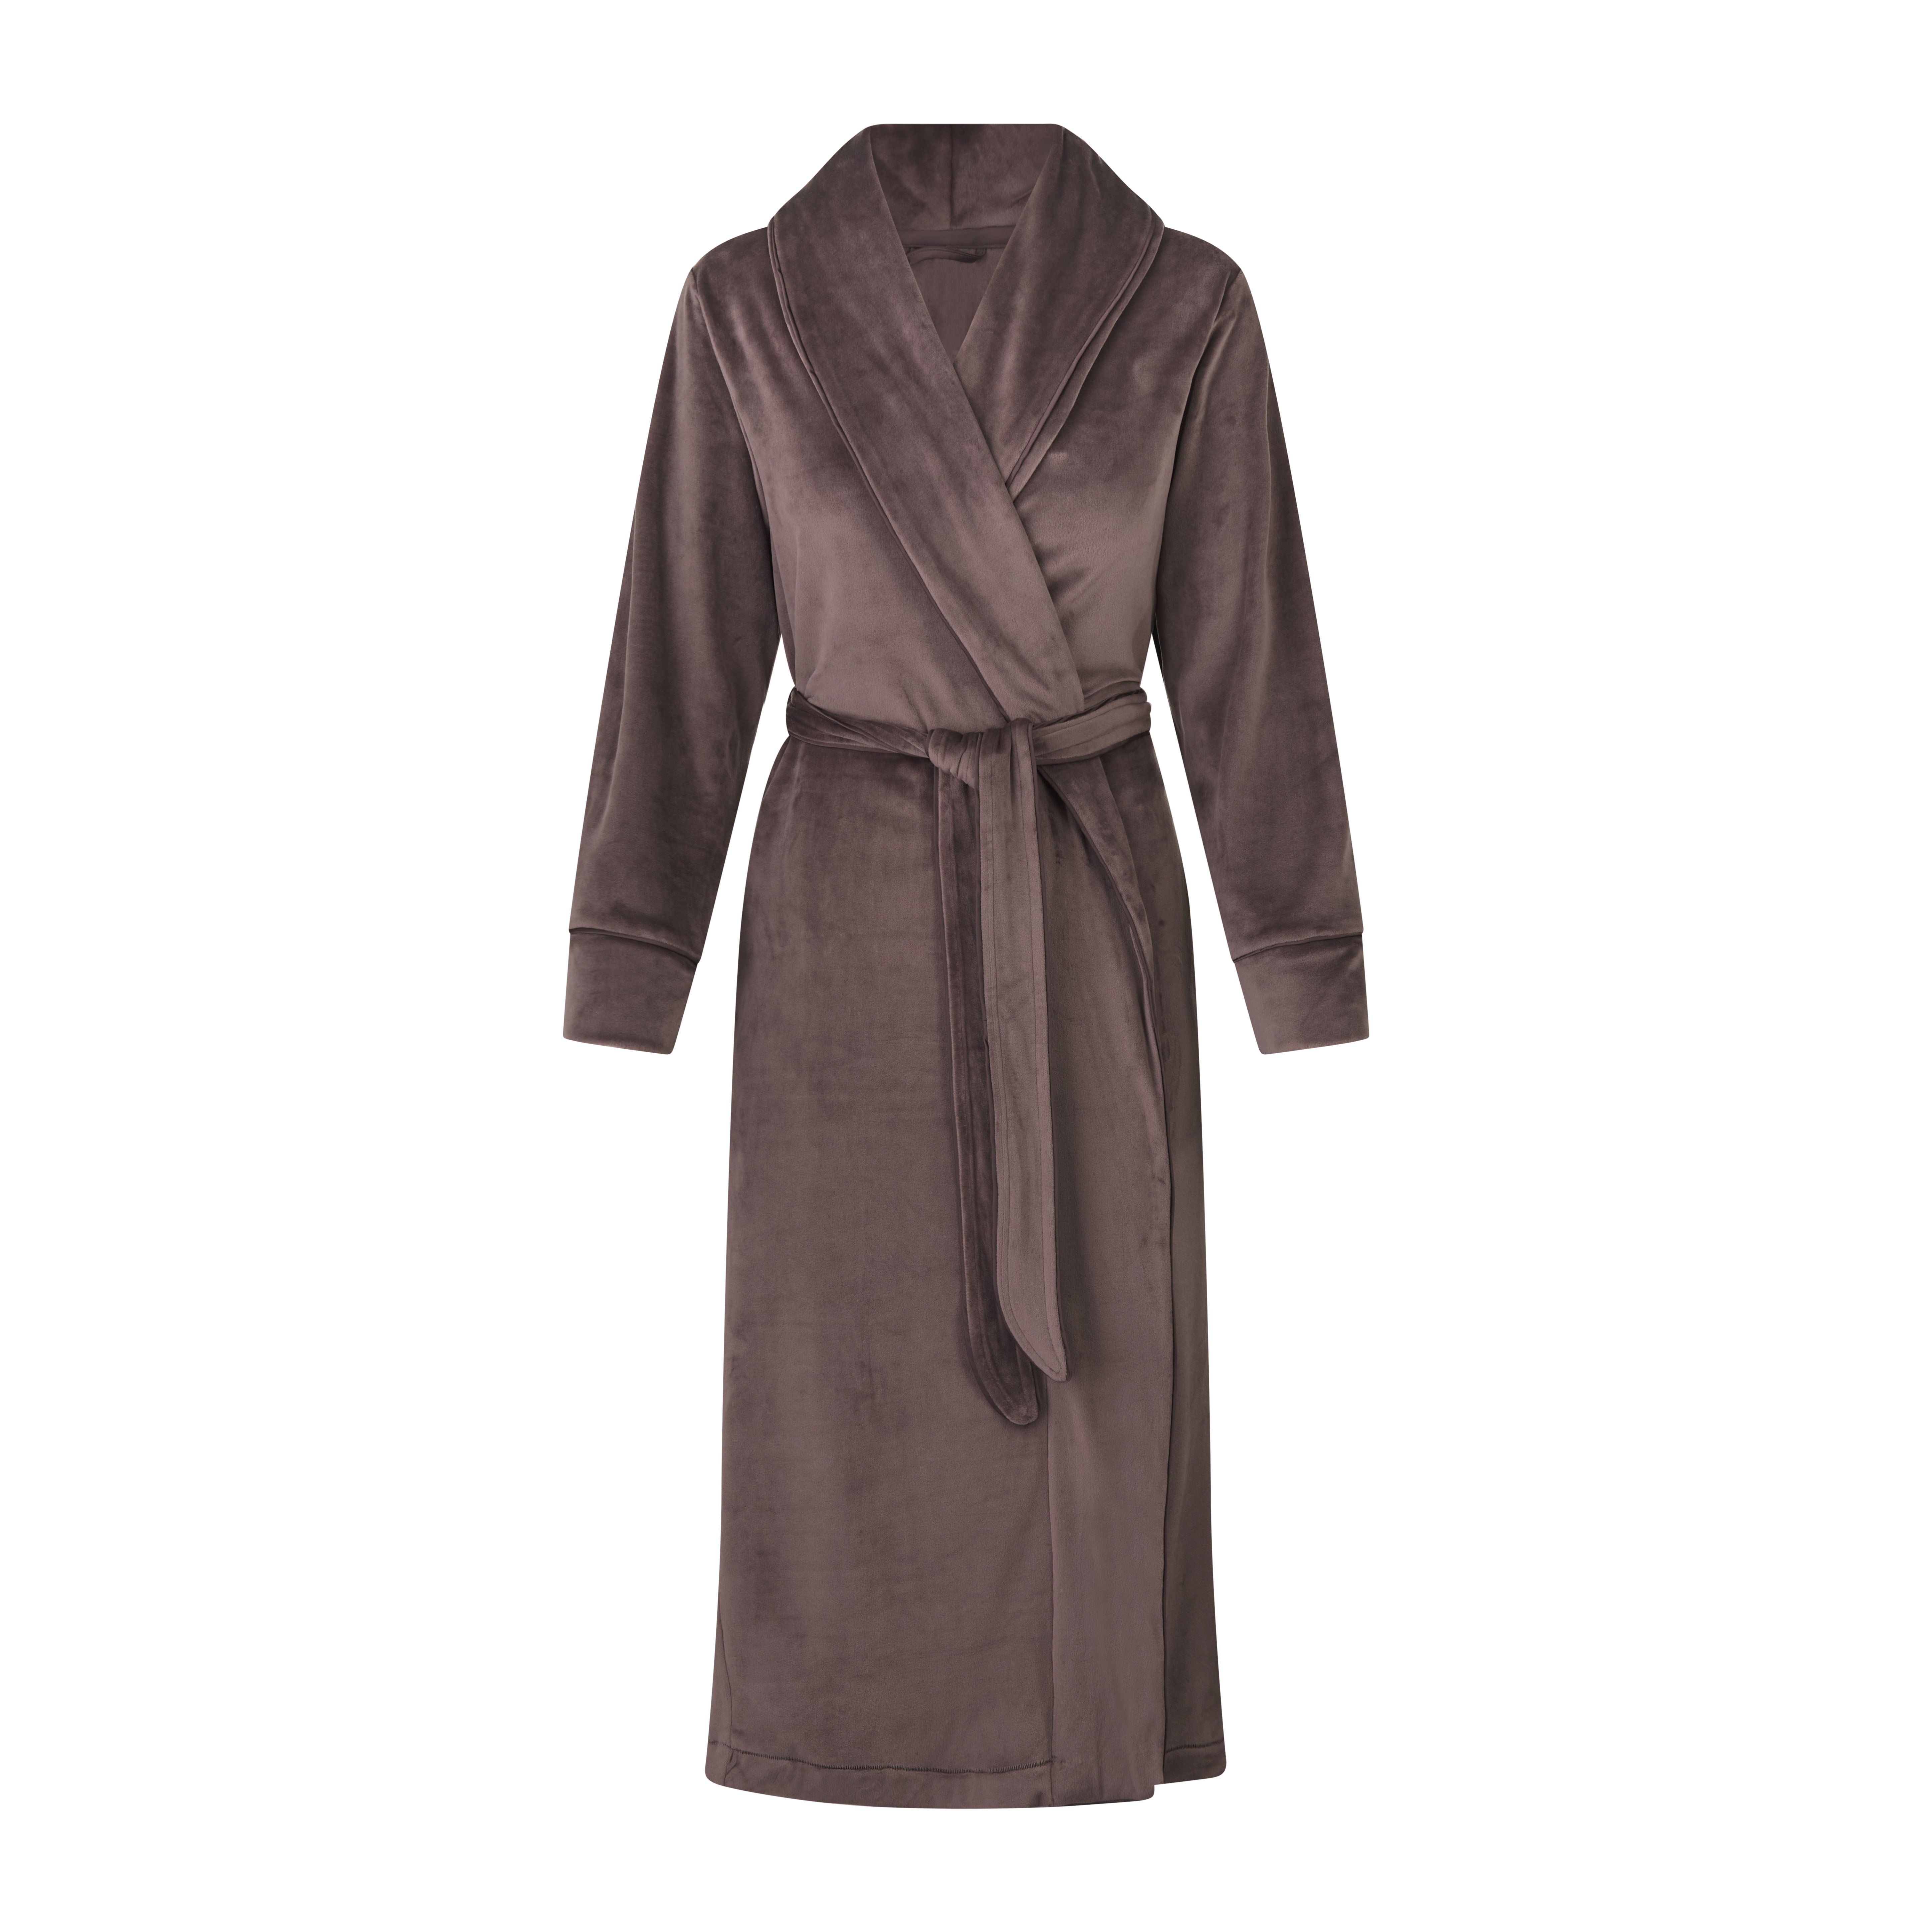 SKIMS Velour Women's Long Robe available at #Nordstrom